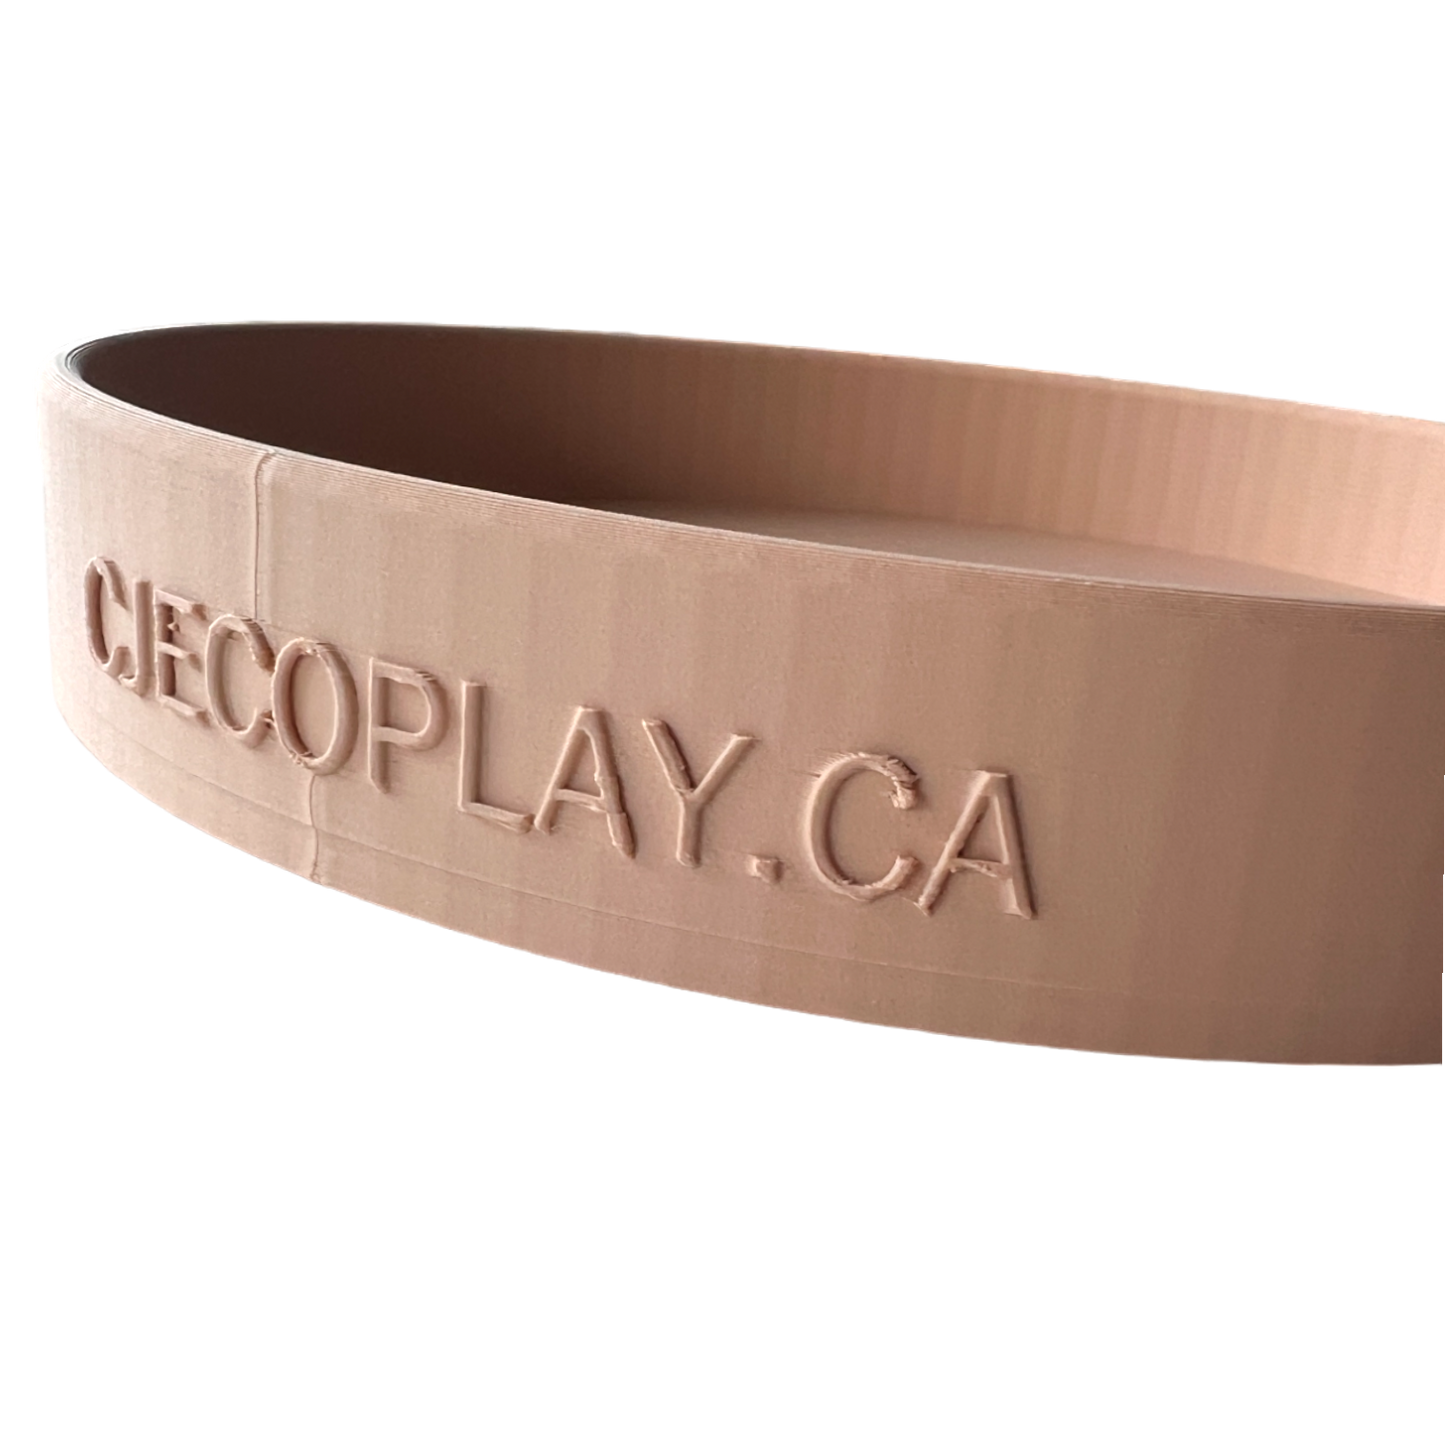 Circle Play EcoTray by CJECOPLAY